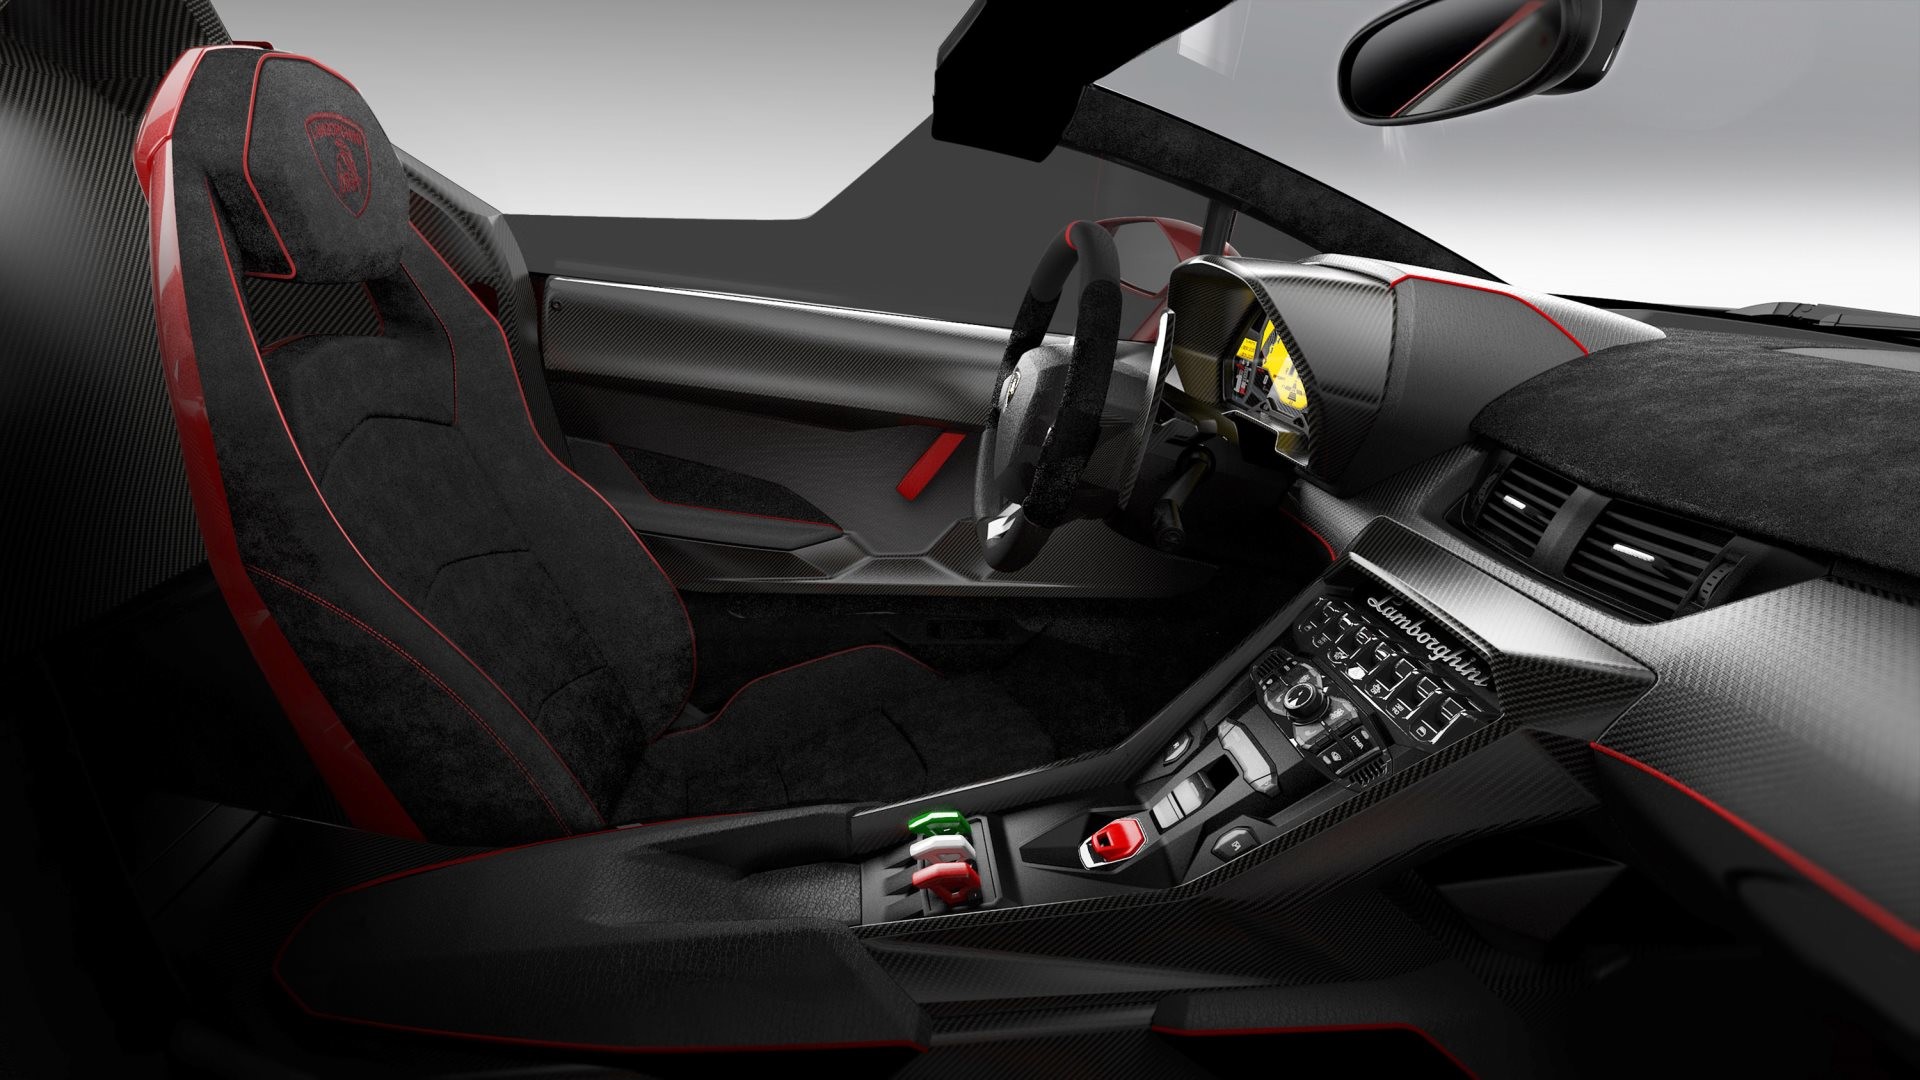 Hd Wallpaper - Lamborghini Veneno Roadster Inside - HD Wallpaper 